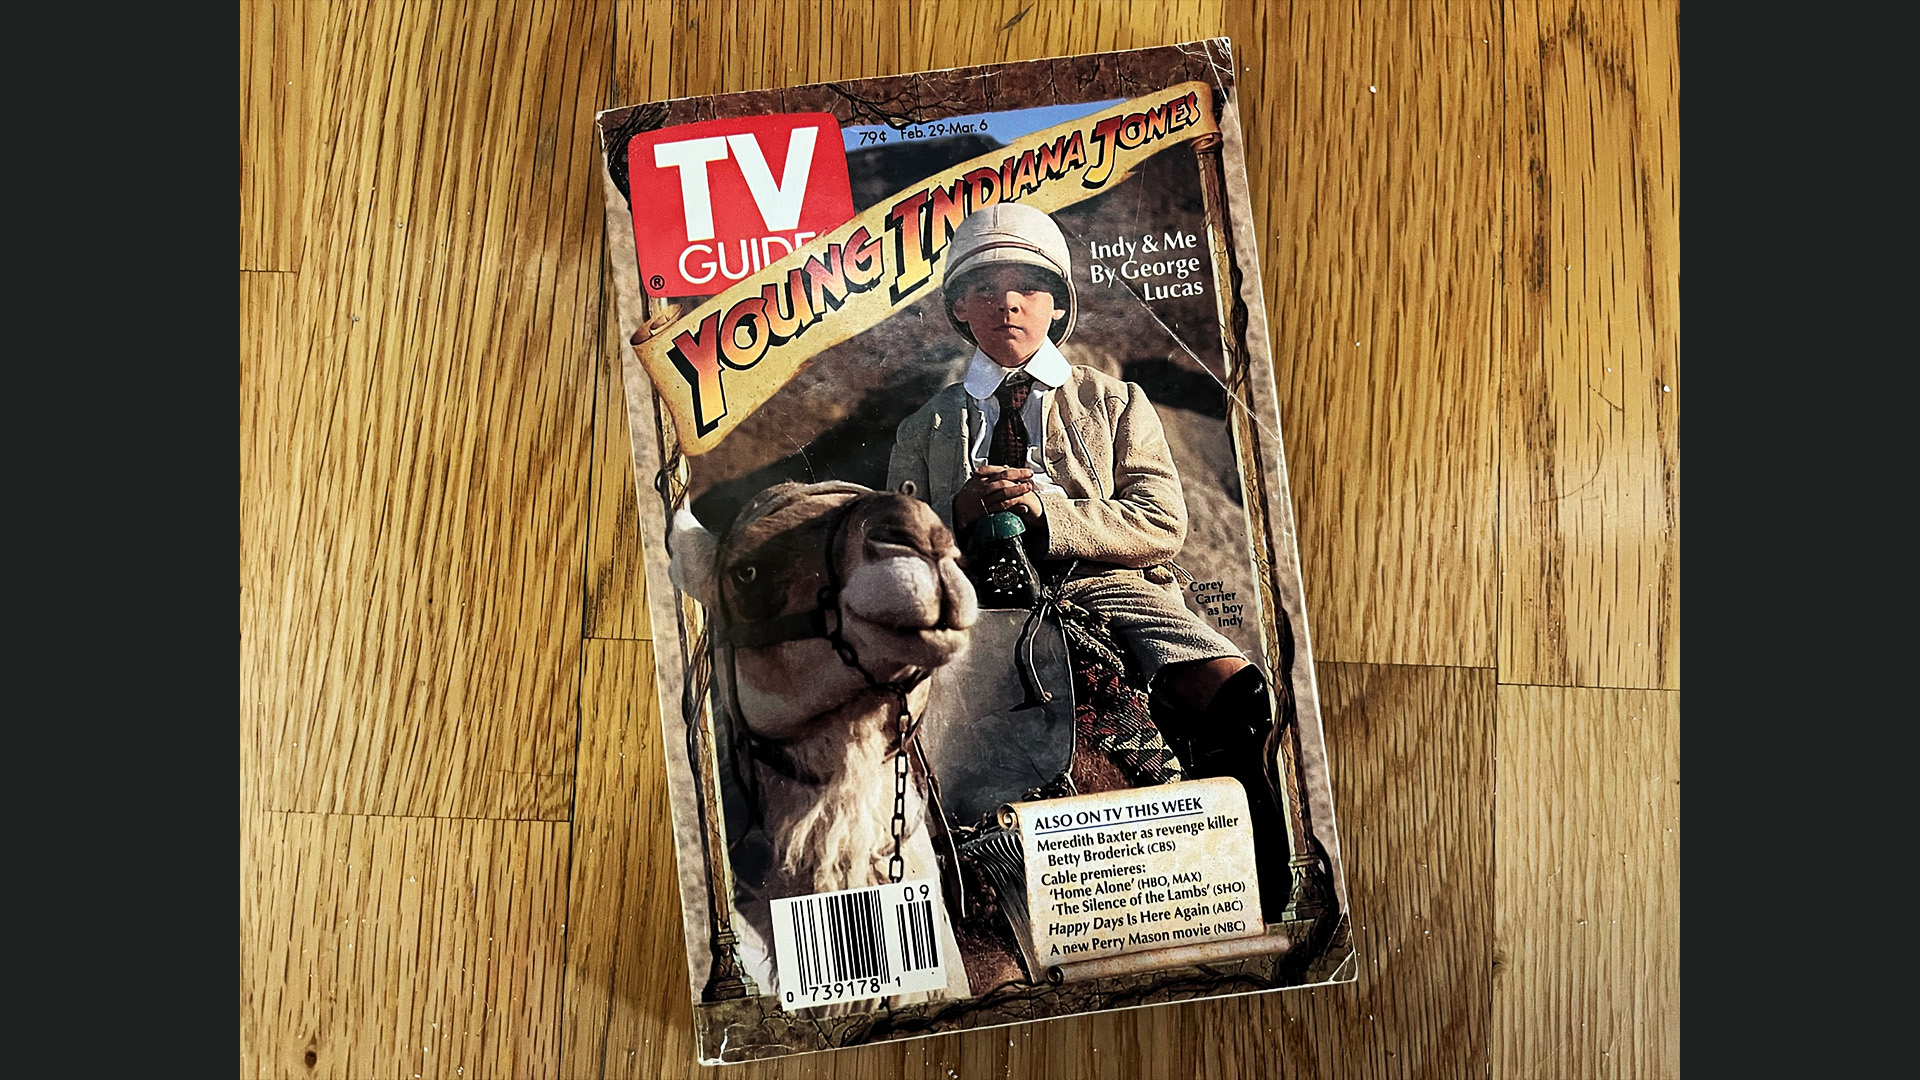 Young Indiana Jones TV Guide